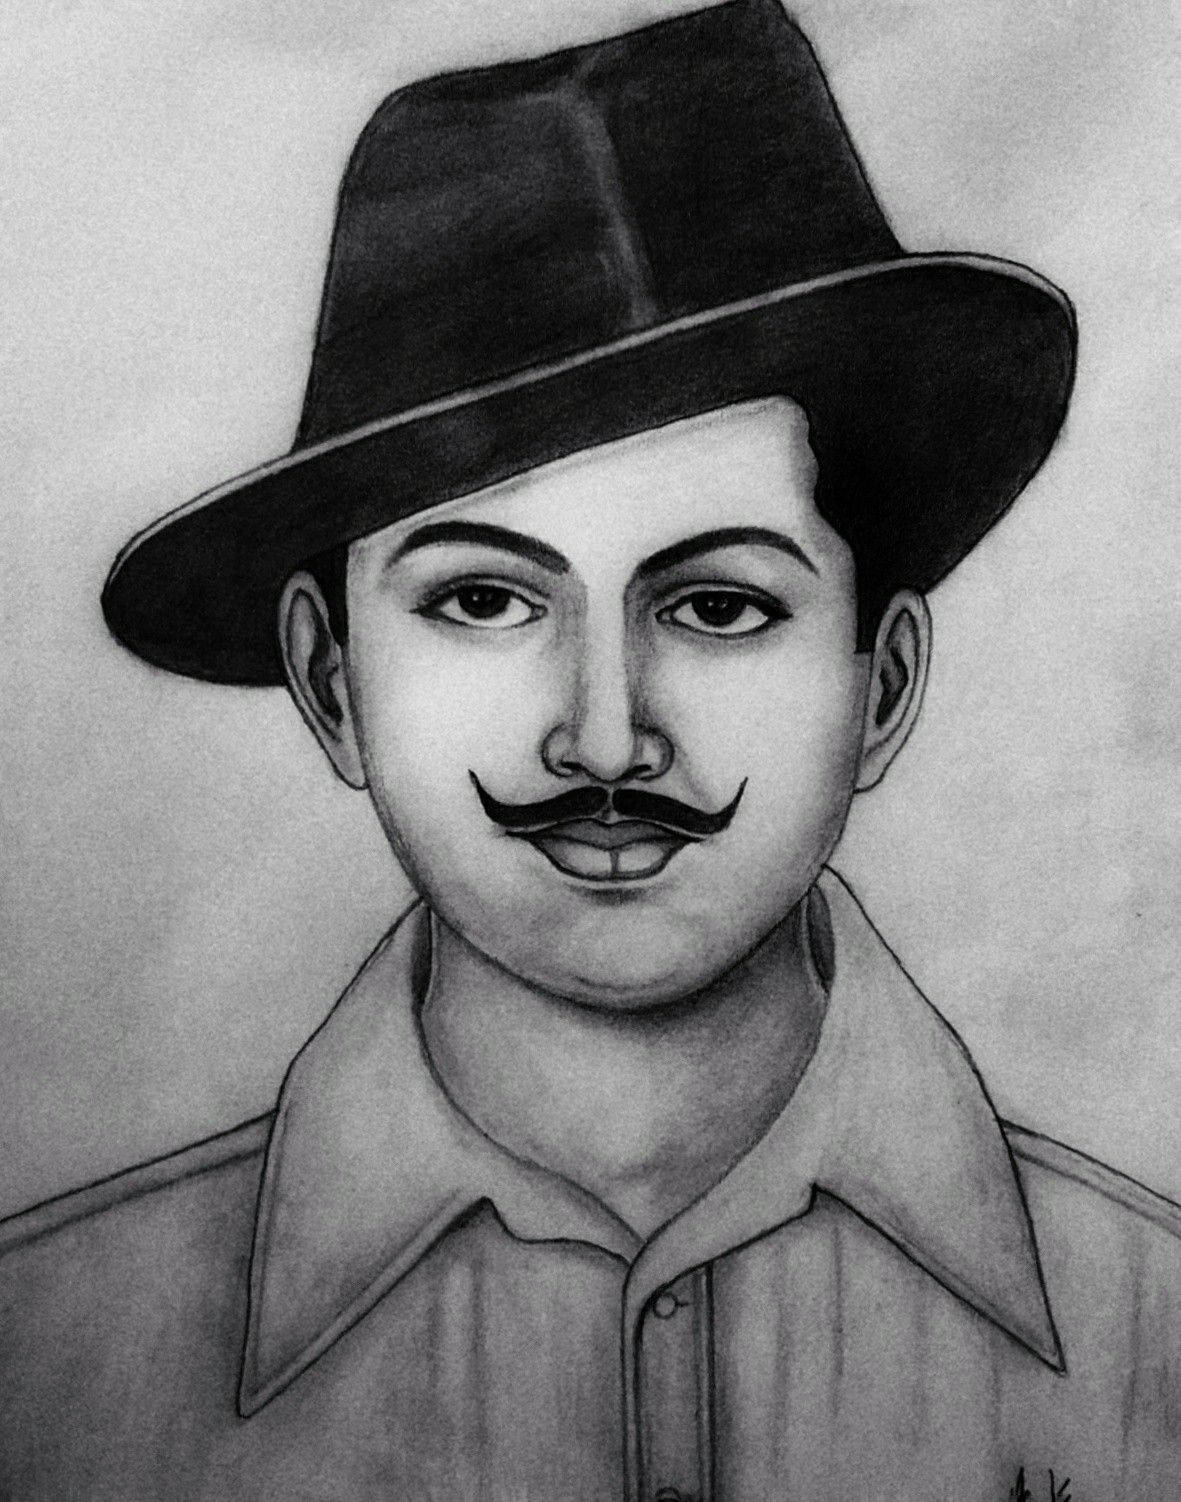 Free Shaheed Bhagat Singh Wallpaper Downloads, [100+] Shaheed Bhagat Singh  Wallpapers for FREE 